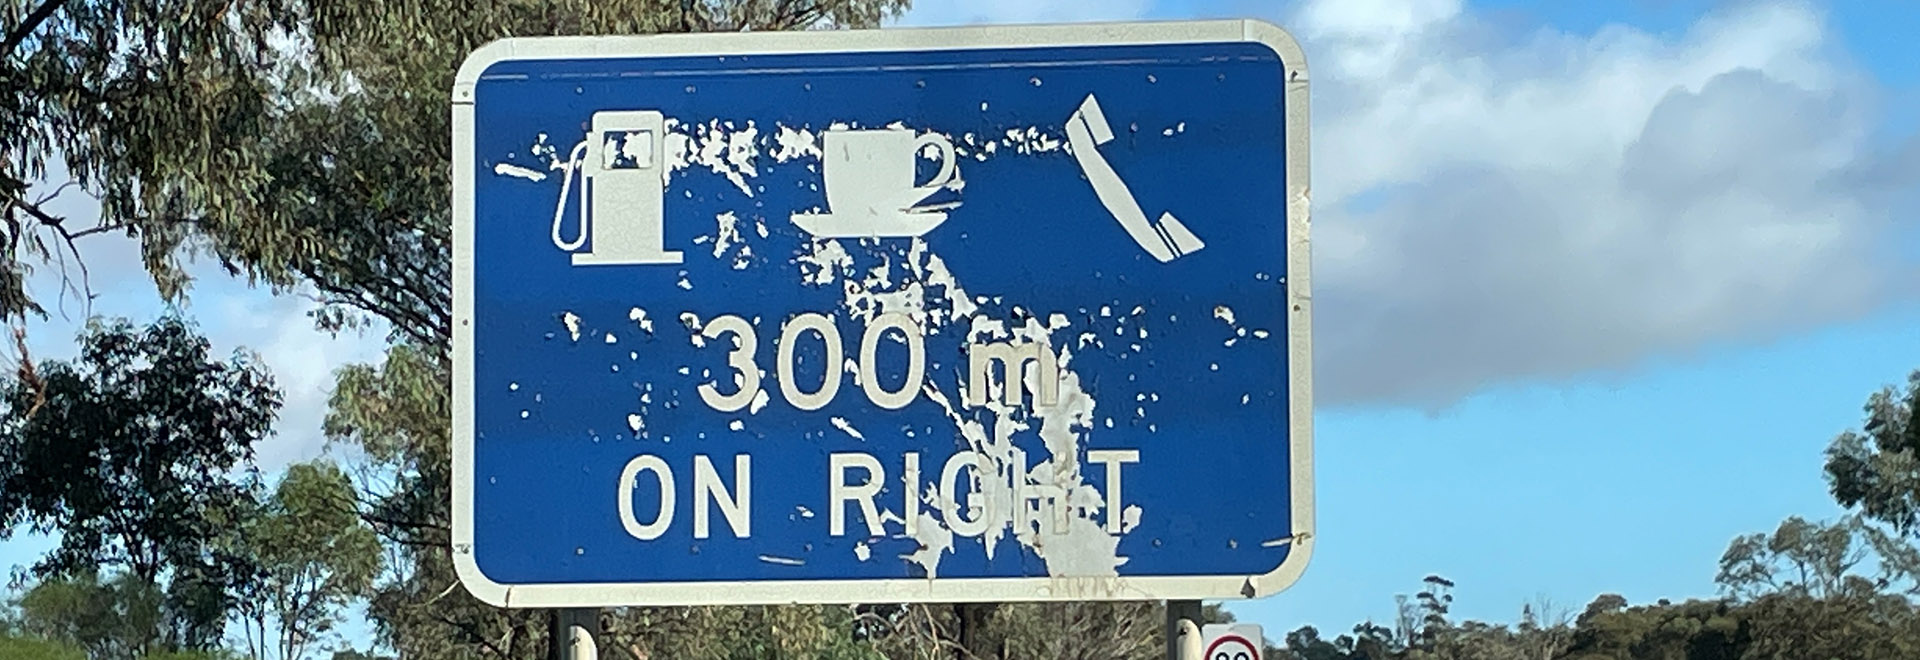 rural council signage